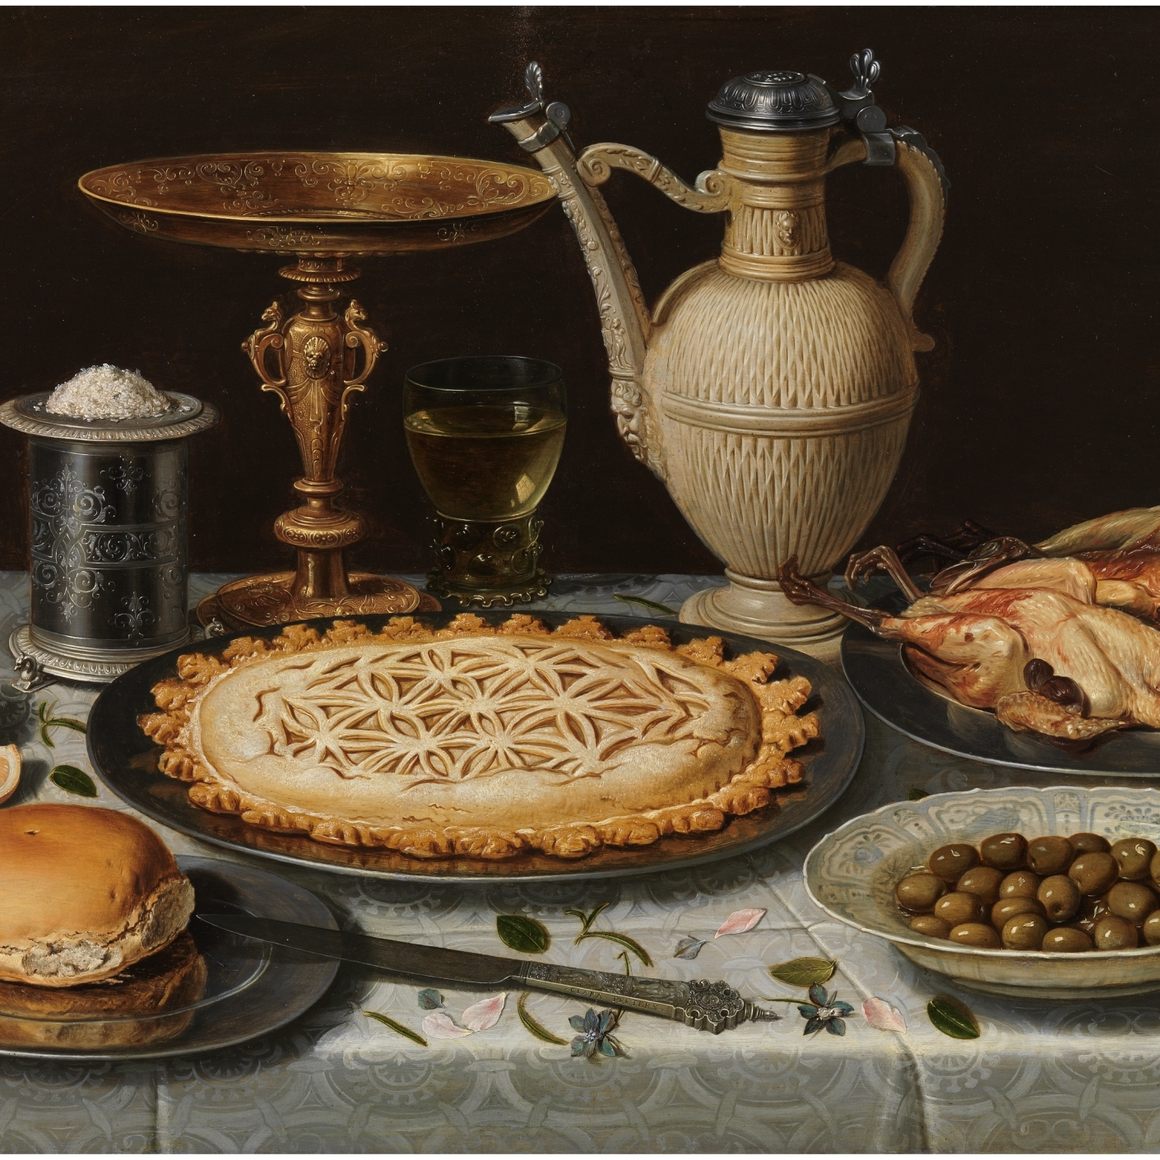 Clara Peeters, Table With a Cloth, Salt Cellar, Gilt Tazza, Pie, Jug, Porcelain Dish With Olives, and Roast Fowl, c. 1611